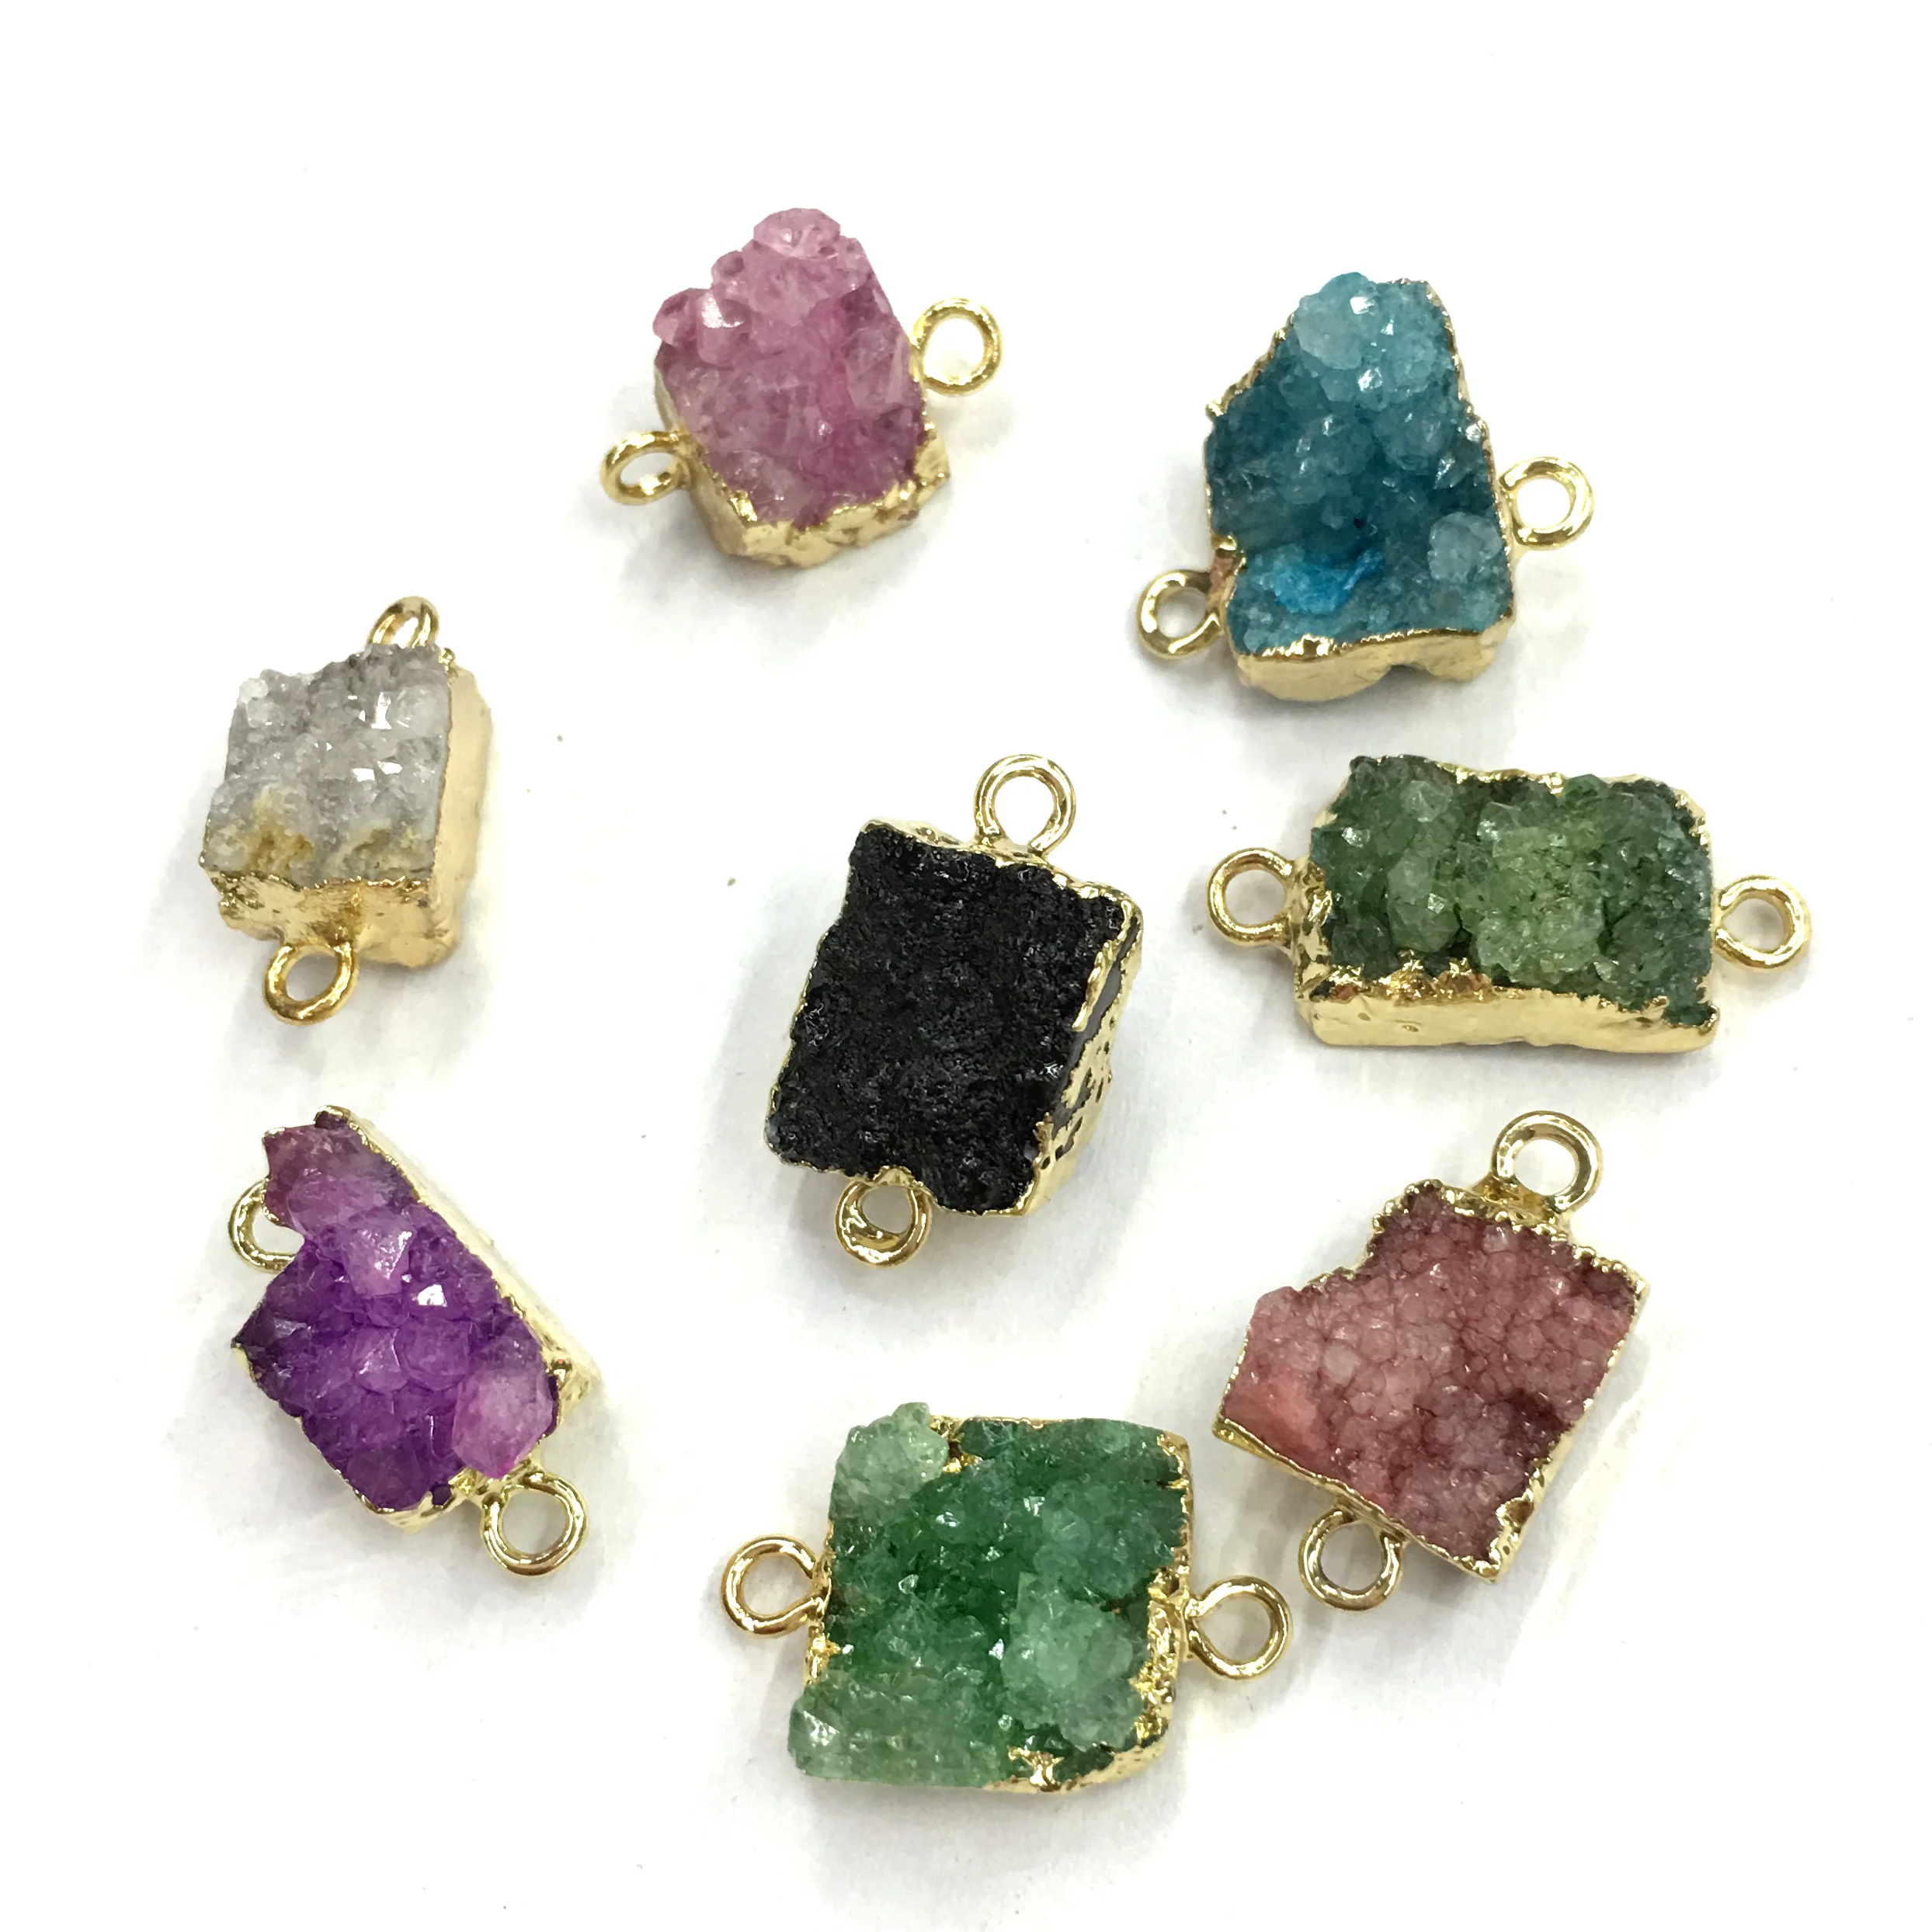 

Wholesale Random Natural Stones Gem Crystal Agate Connector Handmade Crafts DIY Necklace Earring Bracelet Jewelry Gift Making